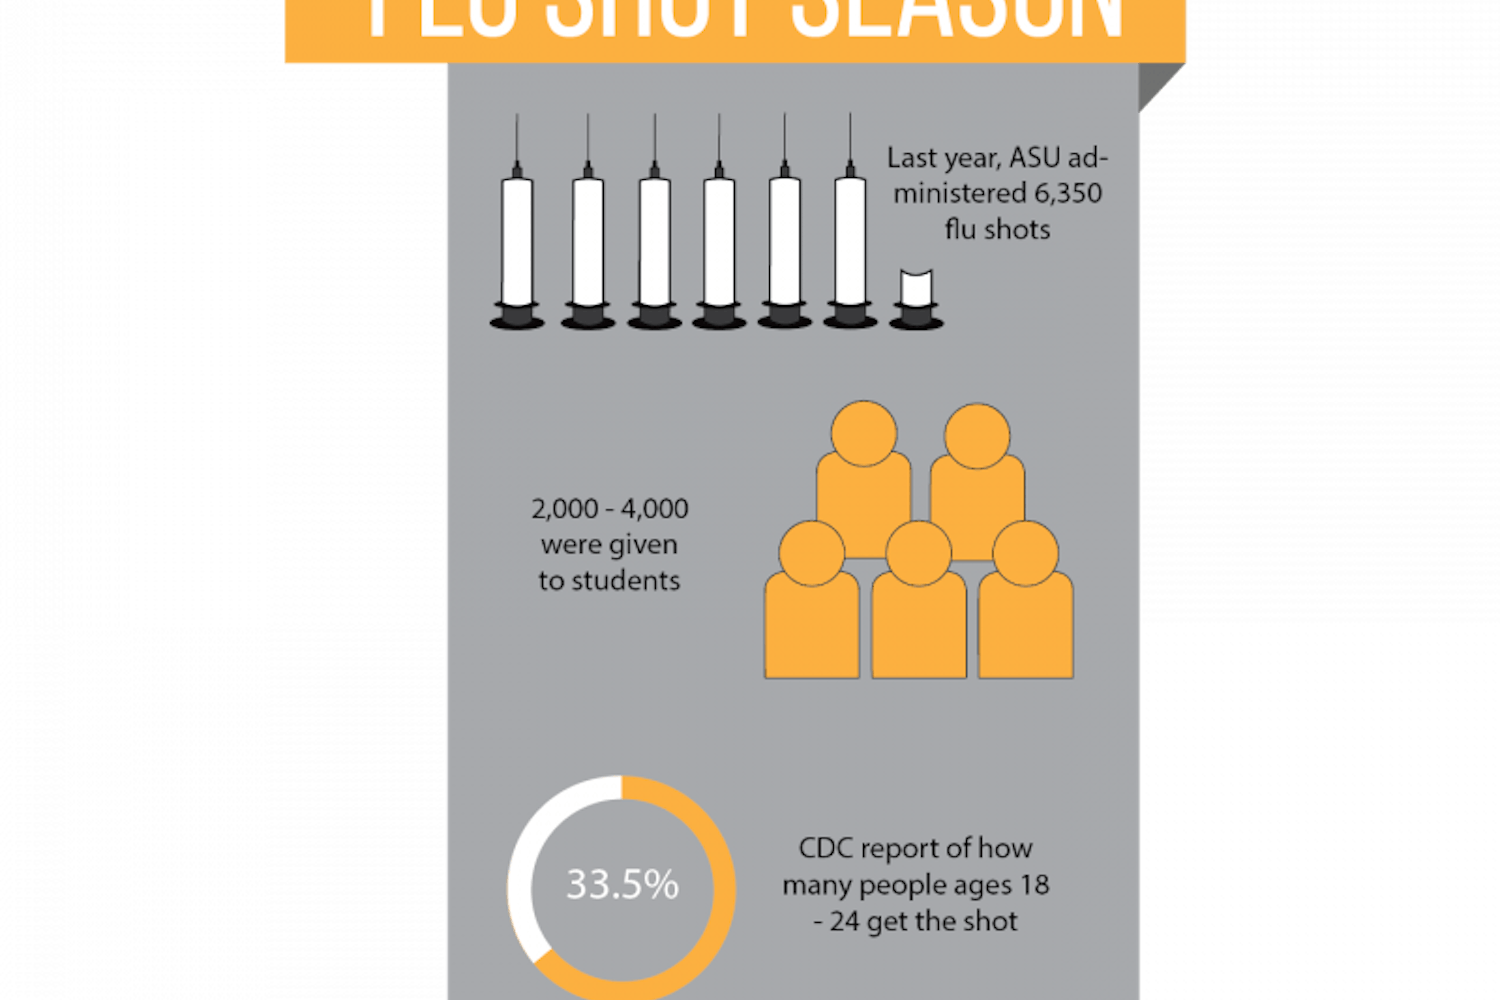 Statistics on flu shot season